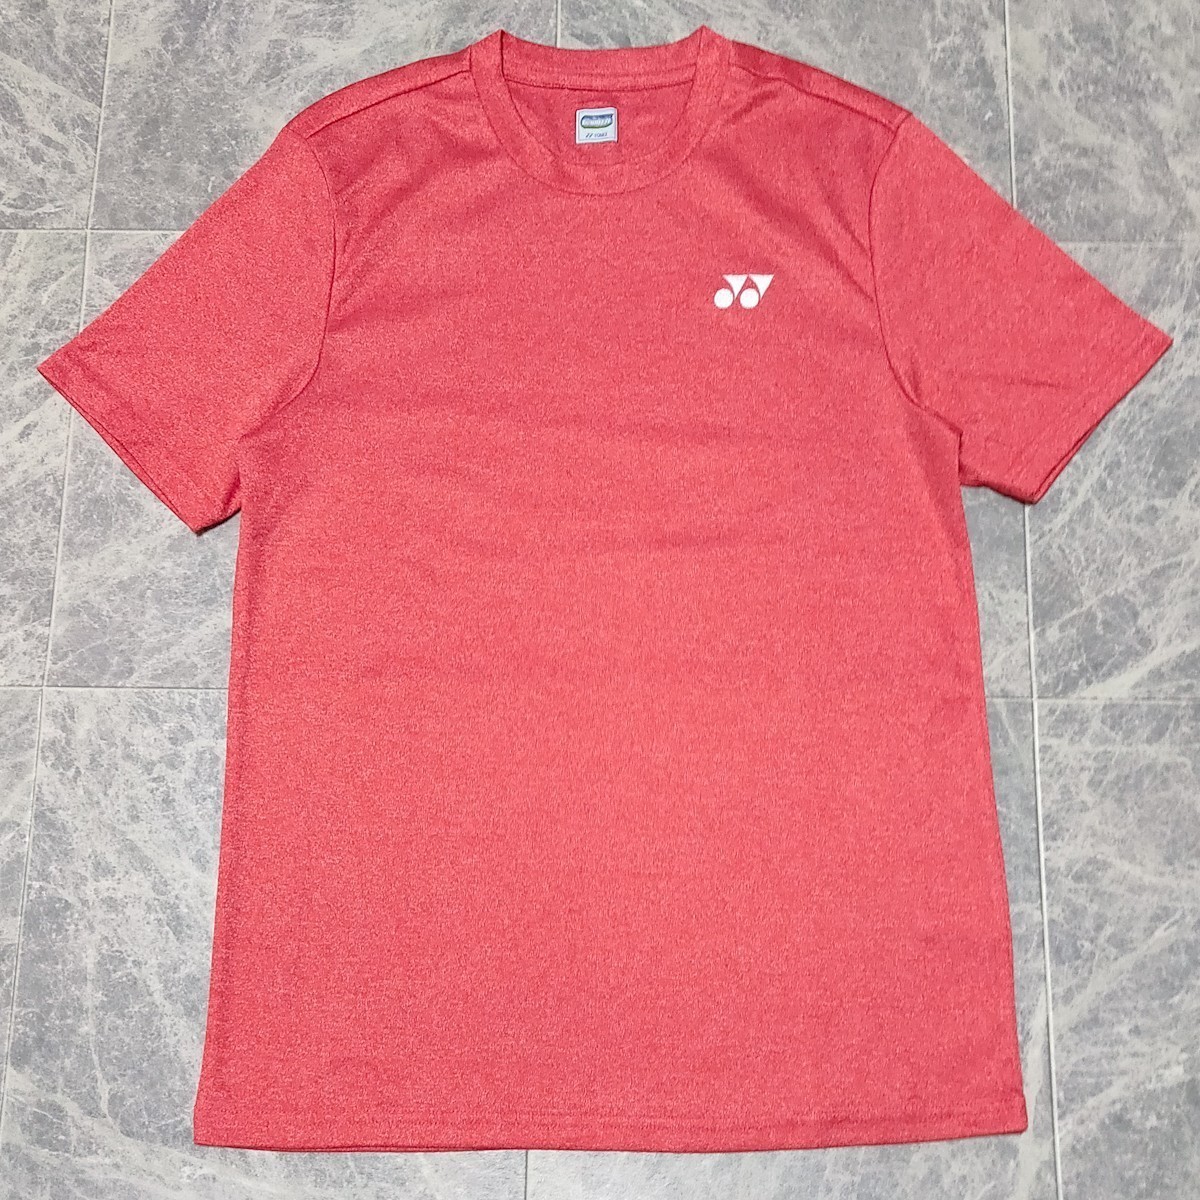 YONEX Yonex Singapore T-shirt limitation 